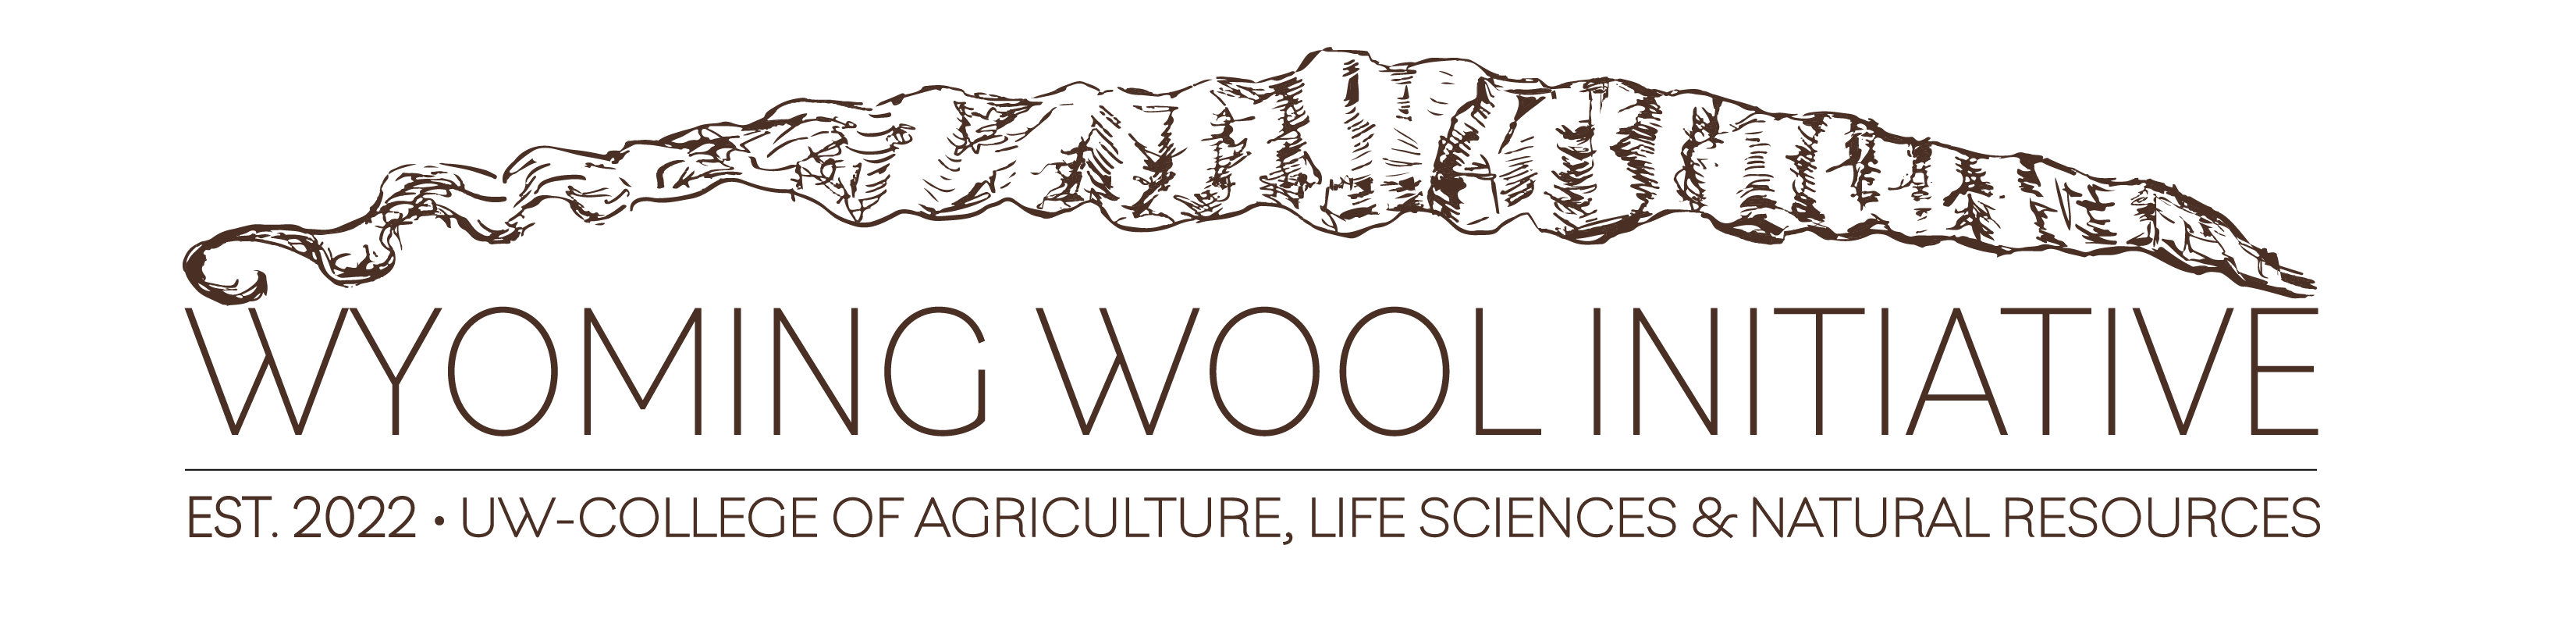 Wyoming Wool Initiative Logo